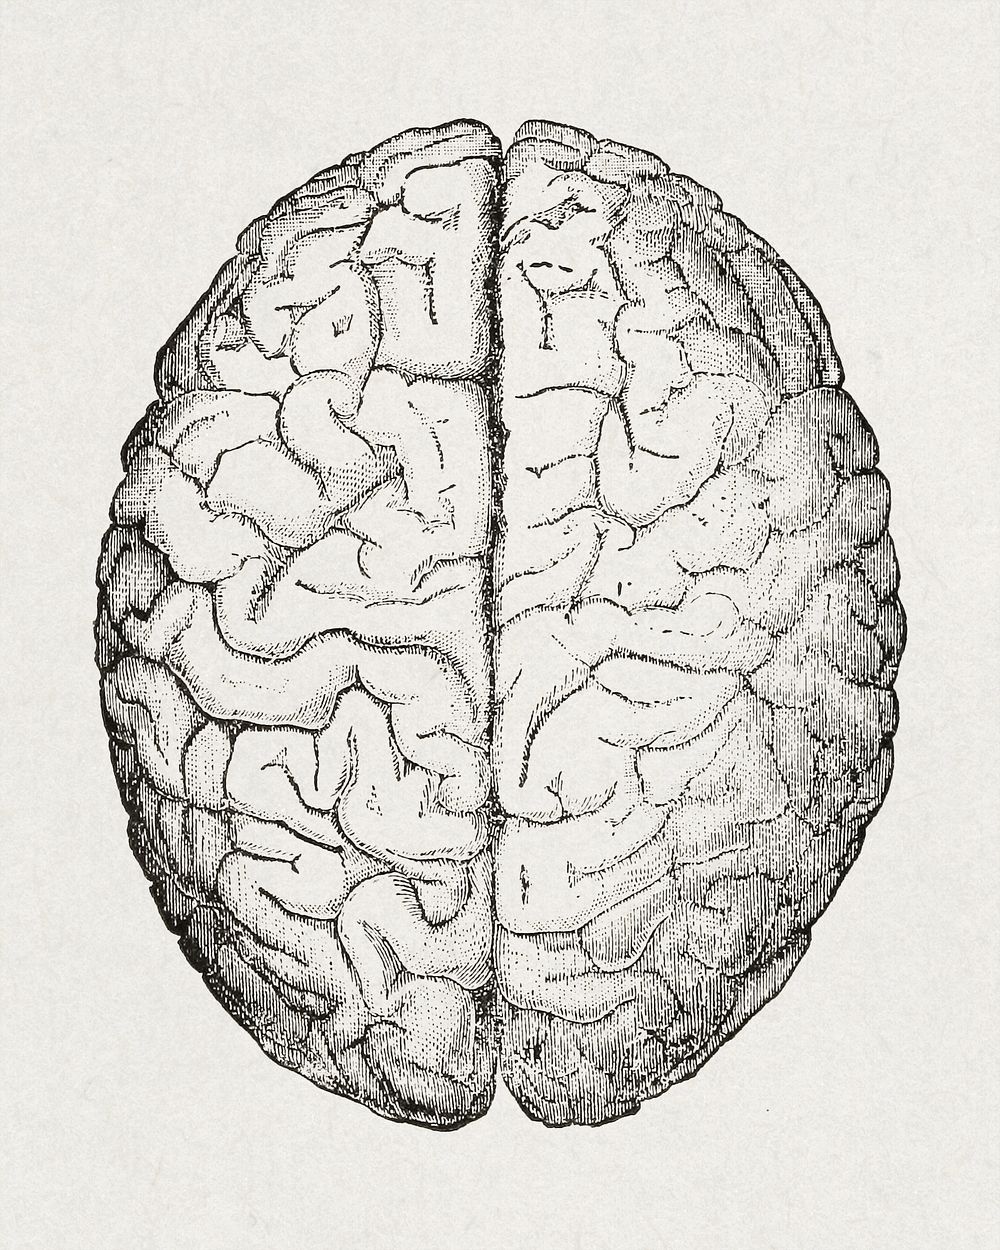 Anatomy, physiology and hygiene (1890), vintage human brain illustration. Original public domain image from Wikimedia…